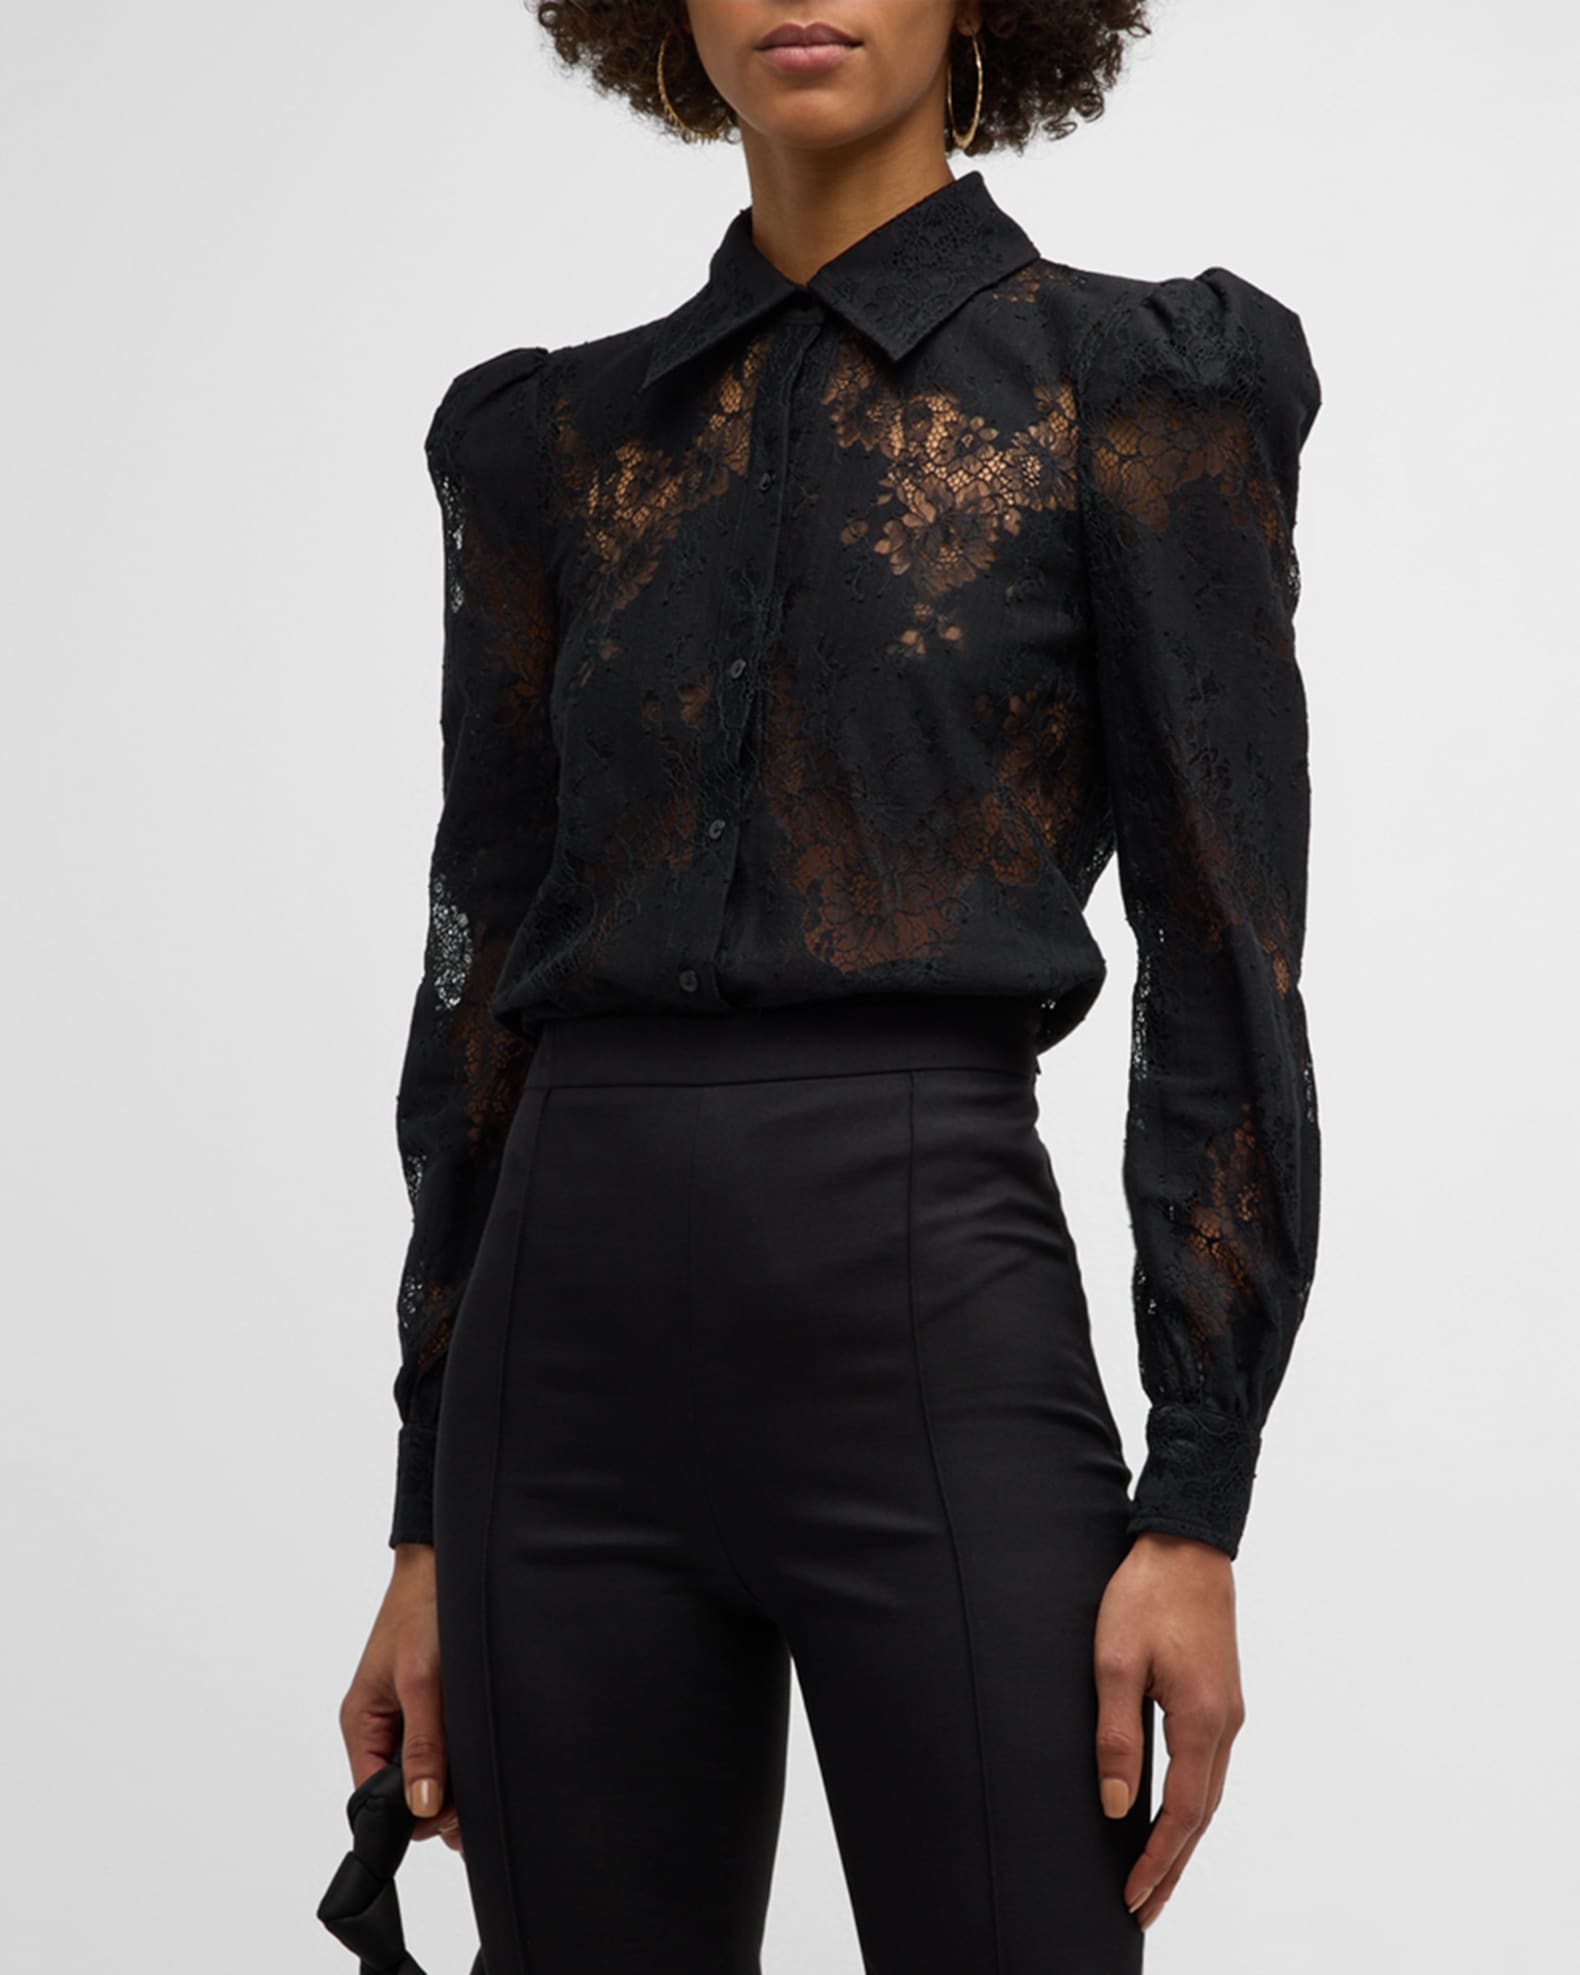 Neiman Marcus Black Lace Top Clearance | website.jkuat.ac.ke